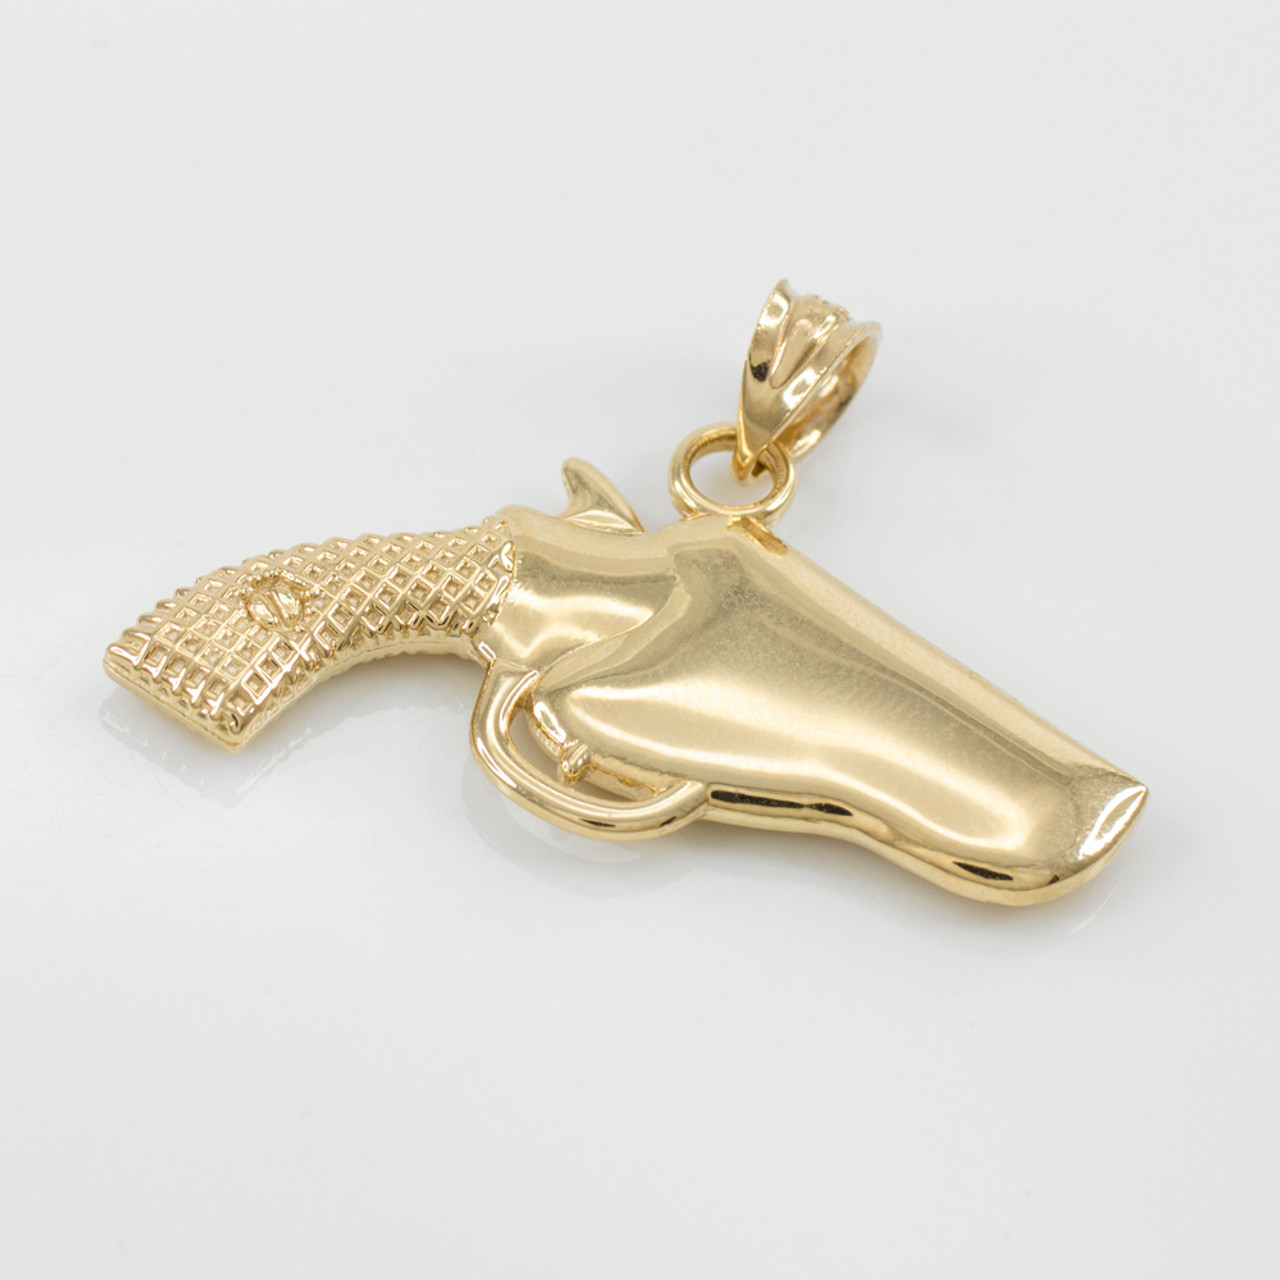 Gold Revolver Pistol Gun in Holster Pendant Necklace | eBay